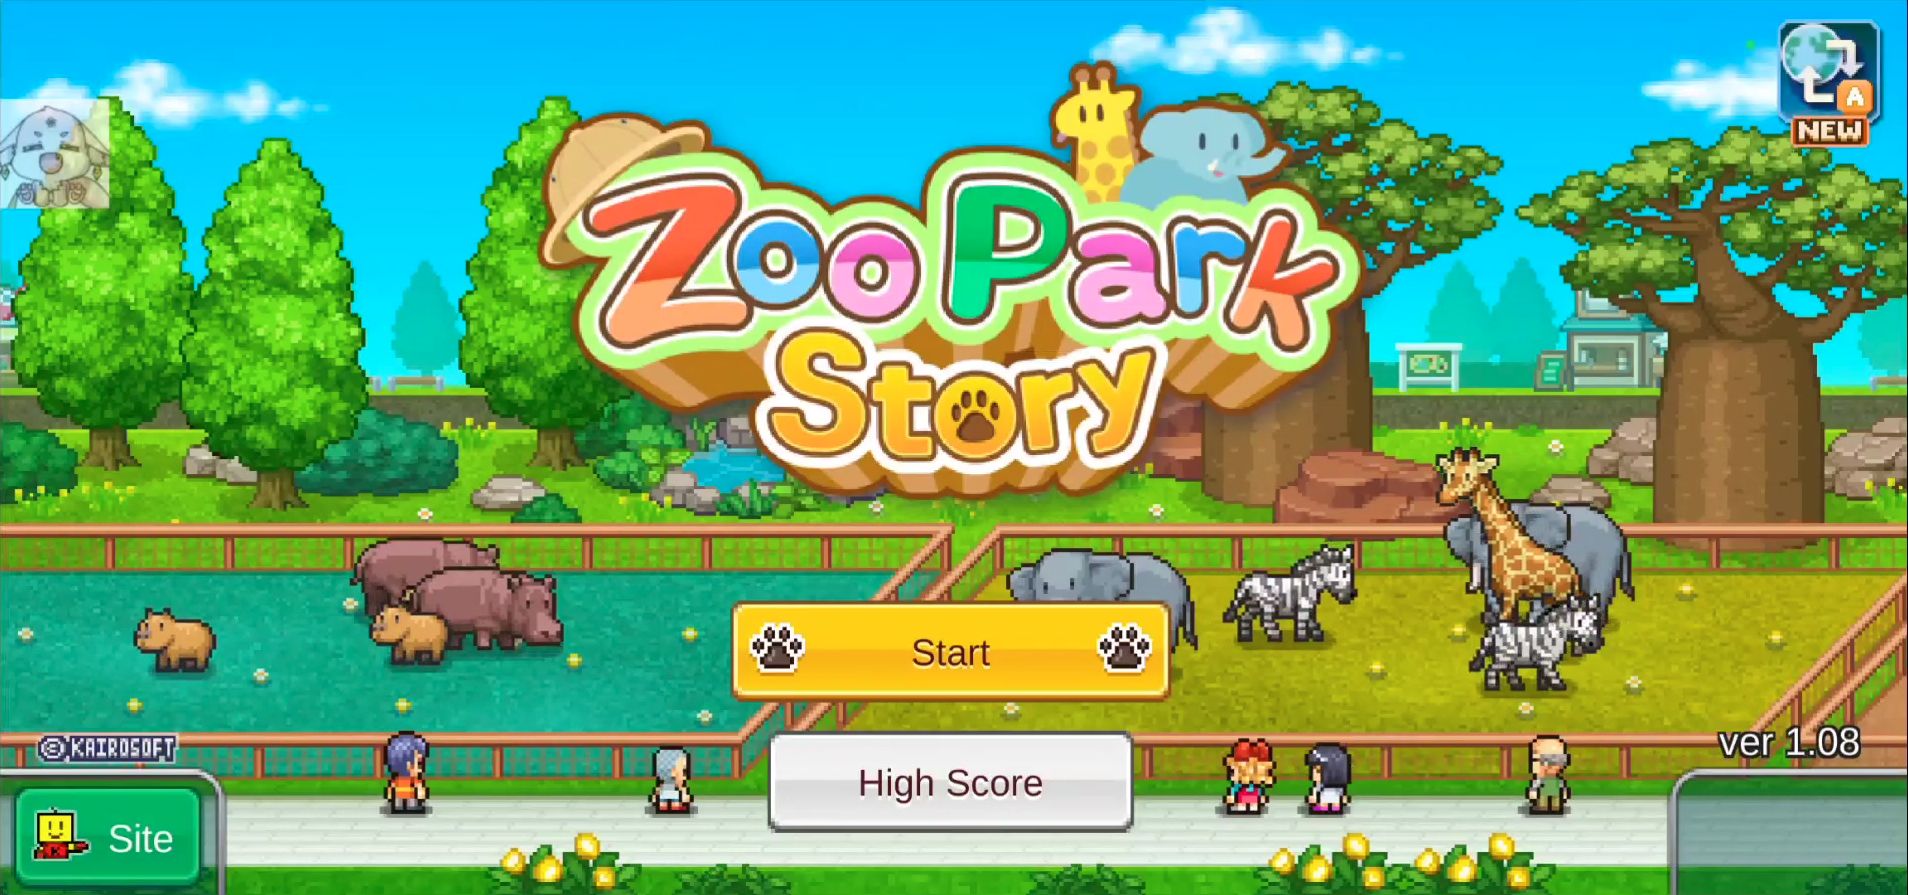 Download Zoo Park Story für Android kostenlos.